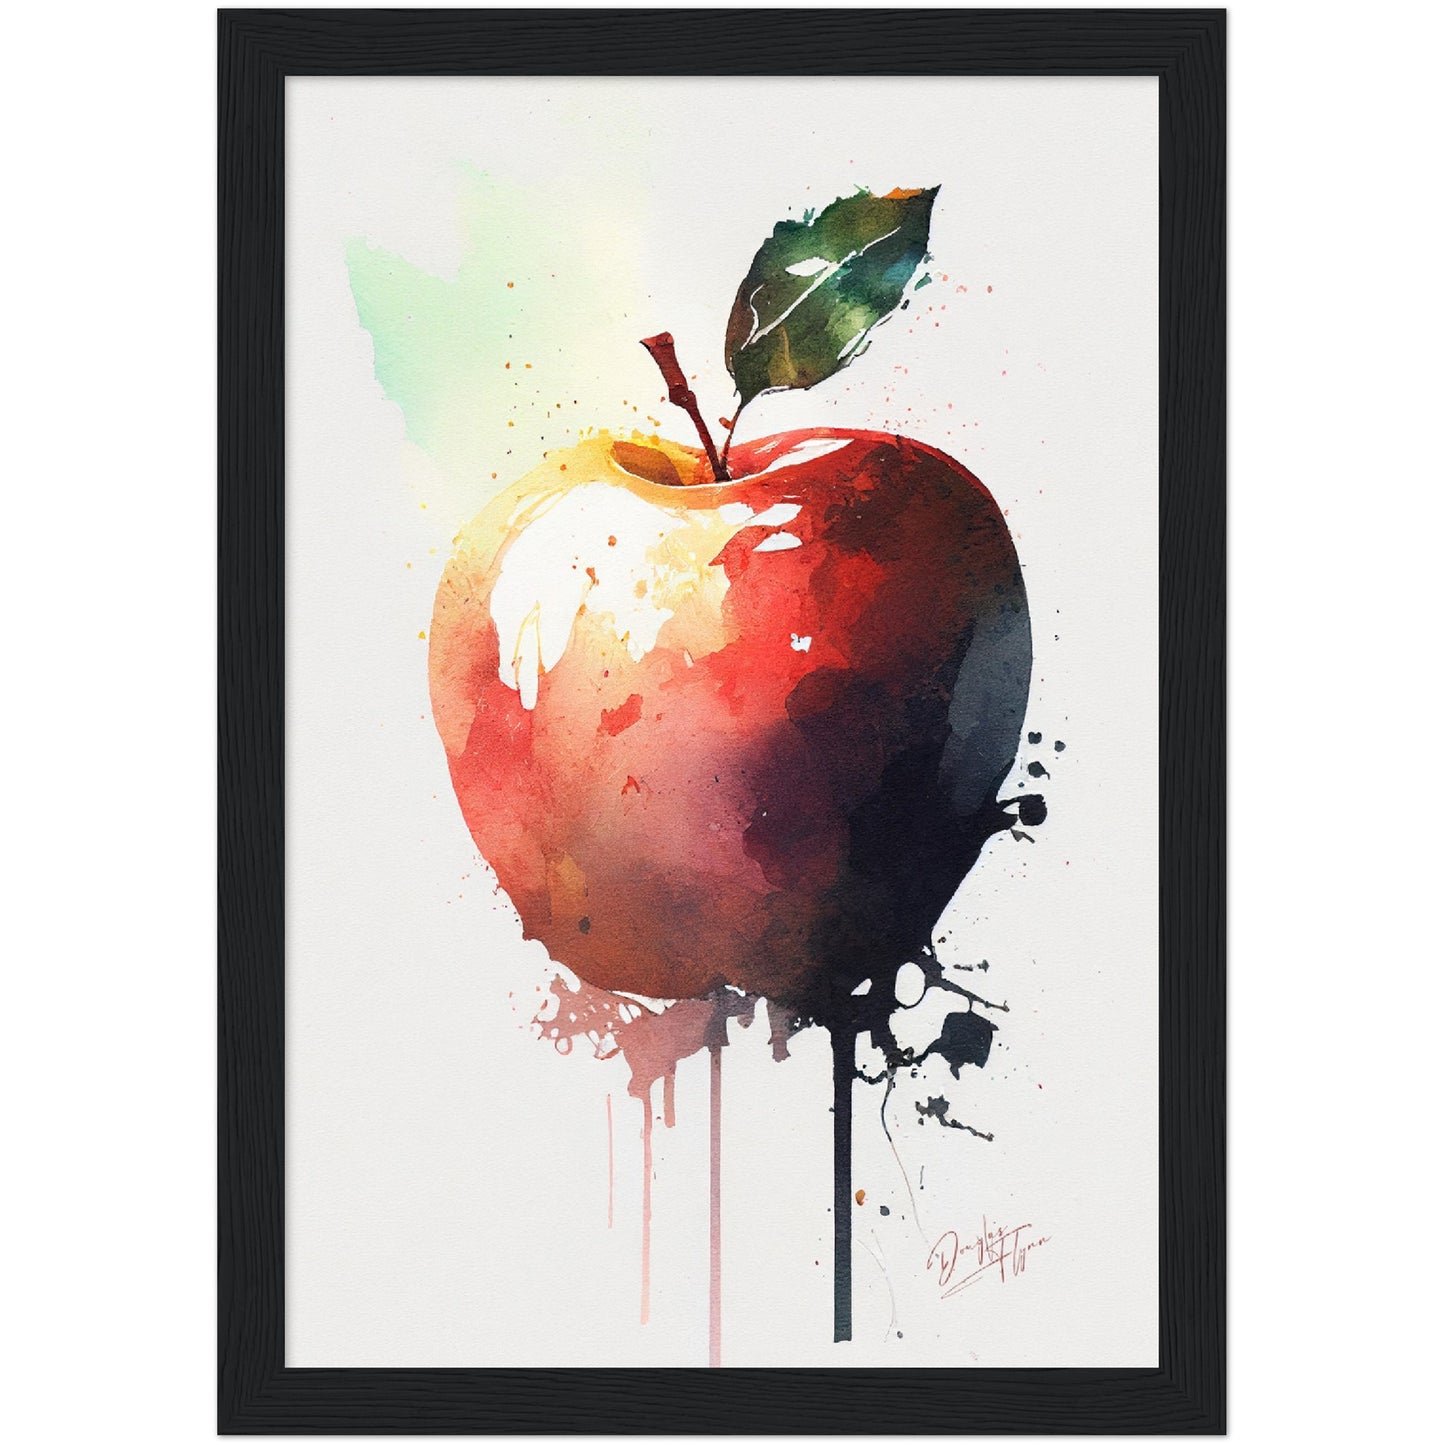 »Apple Pigments« retro poster